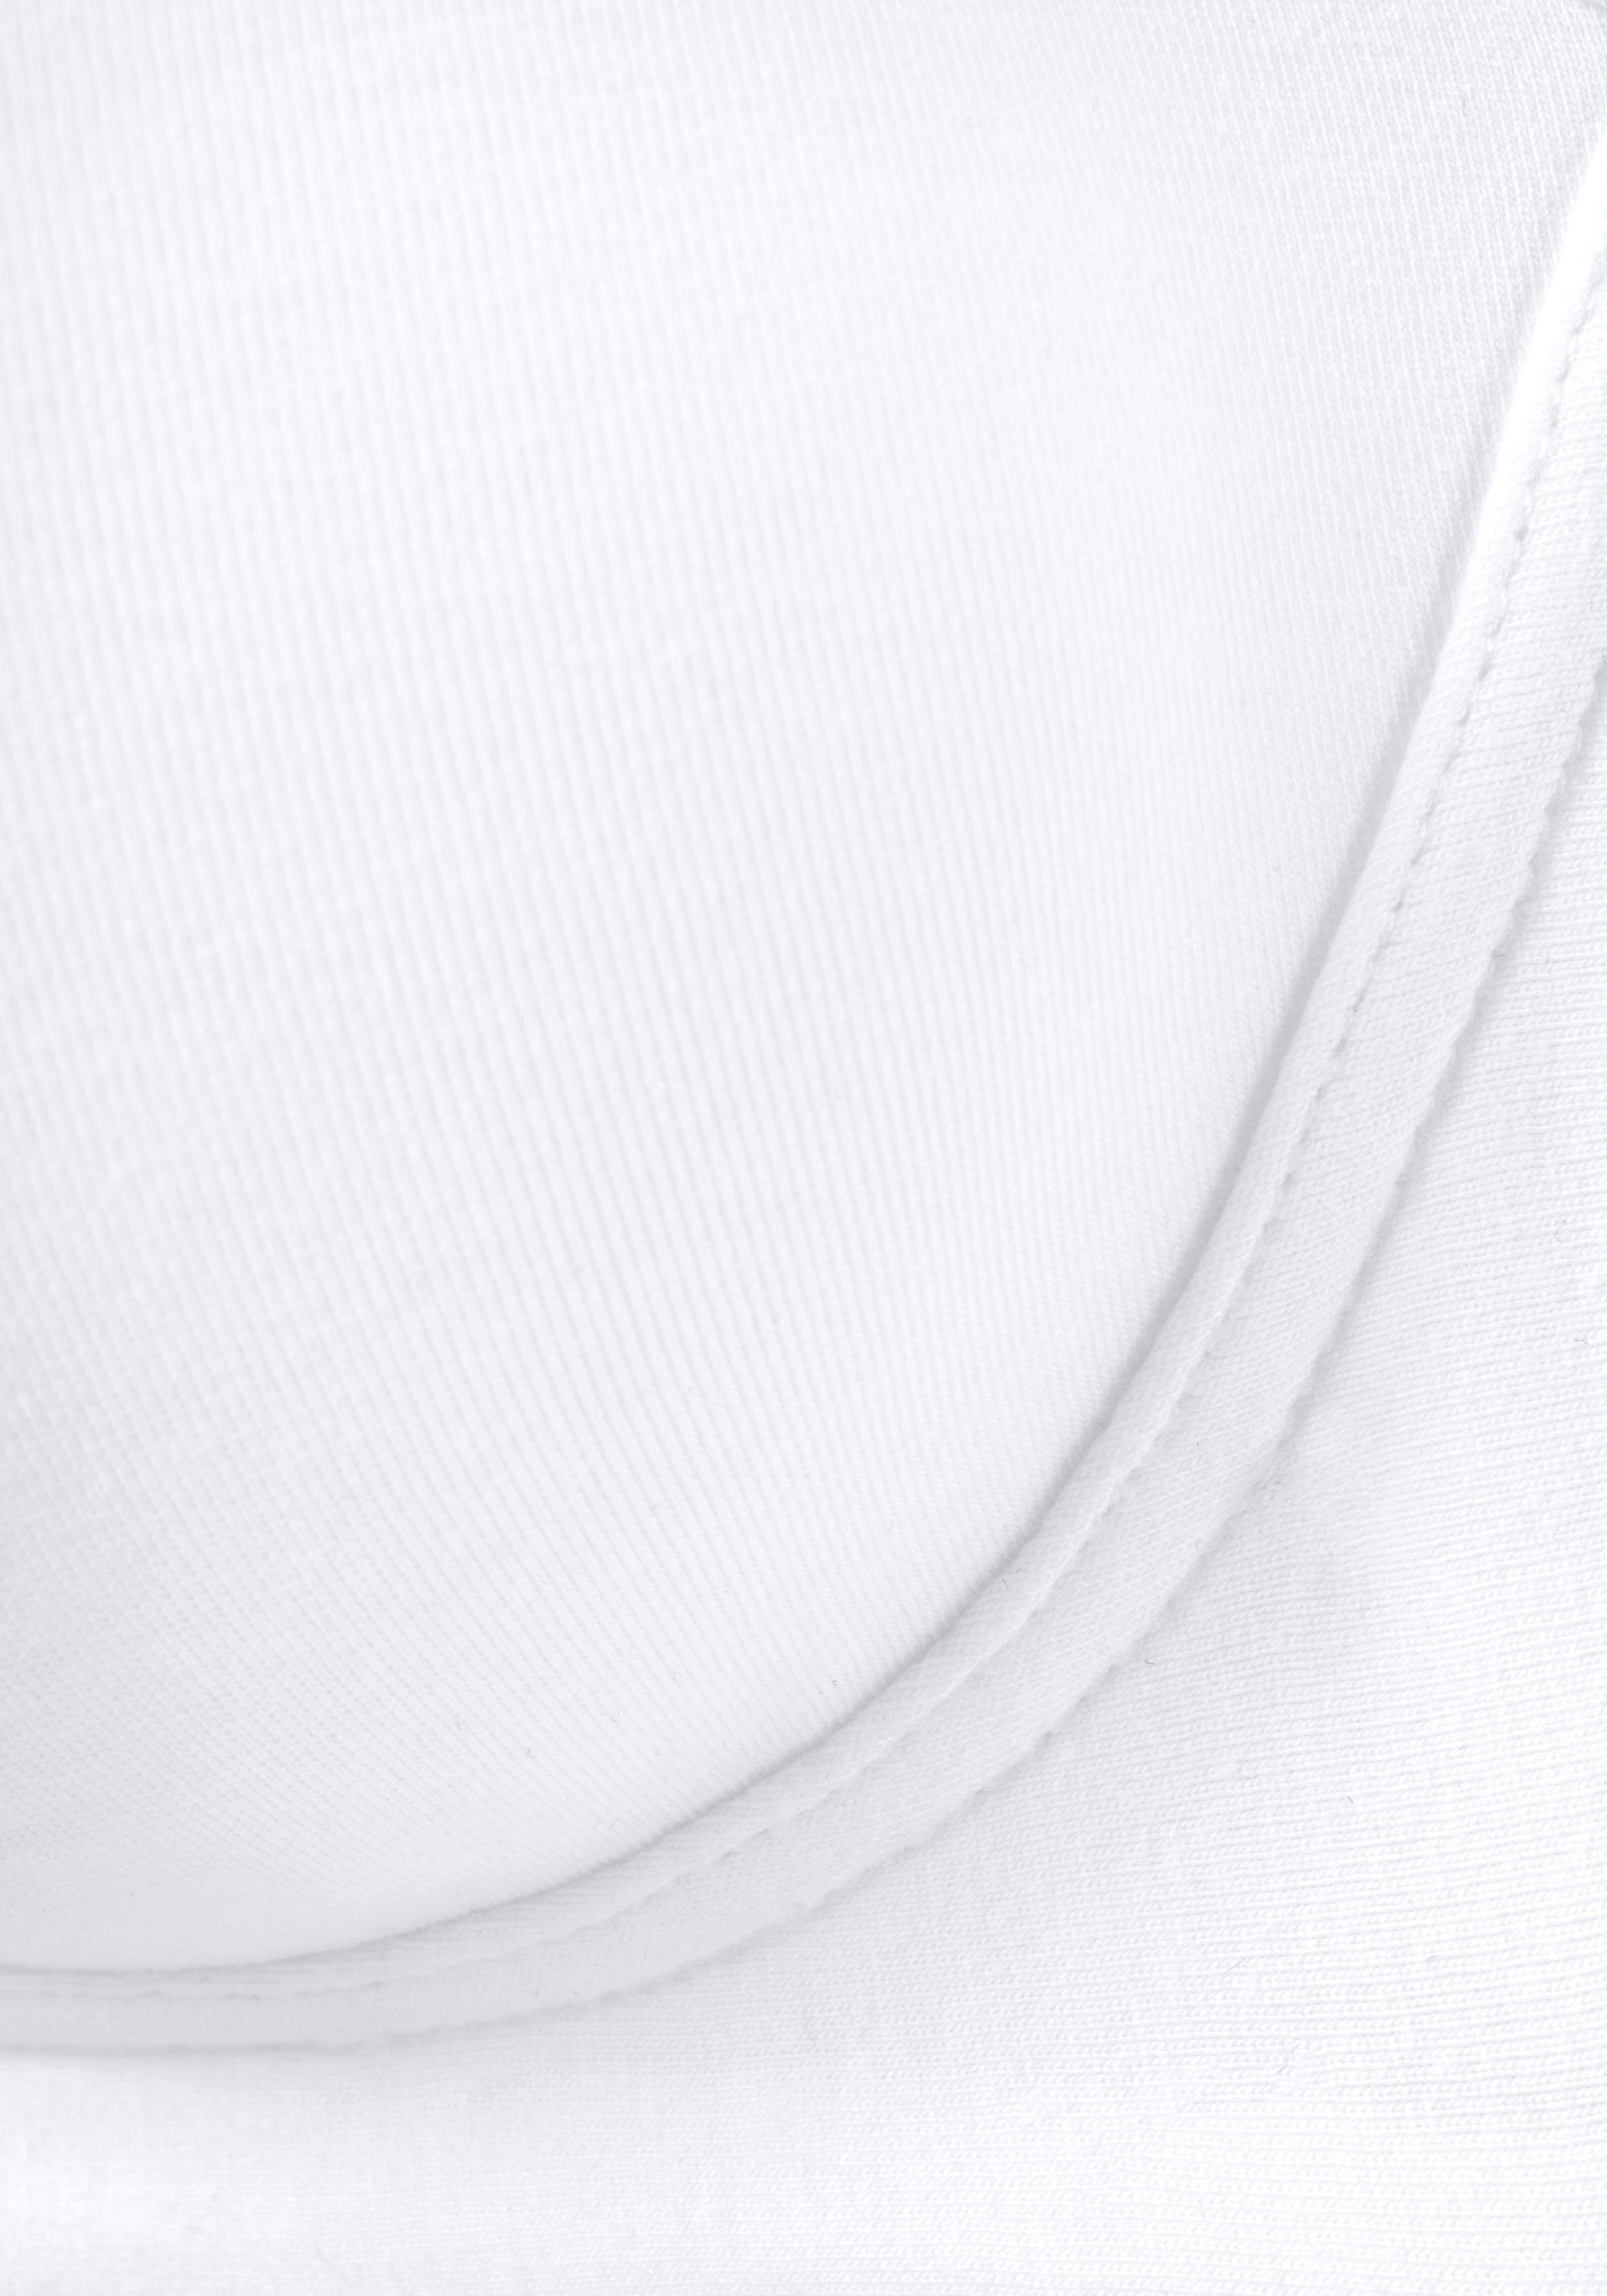 Baumwolle, Dessous Basic aus petite ohne 2 mint+weiß fleur Stück) (Packung, Bügel T-Shirt-BH